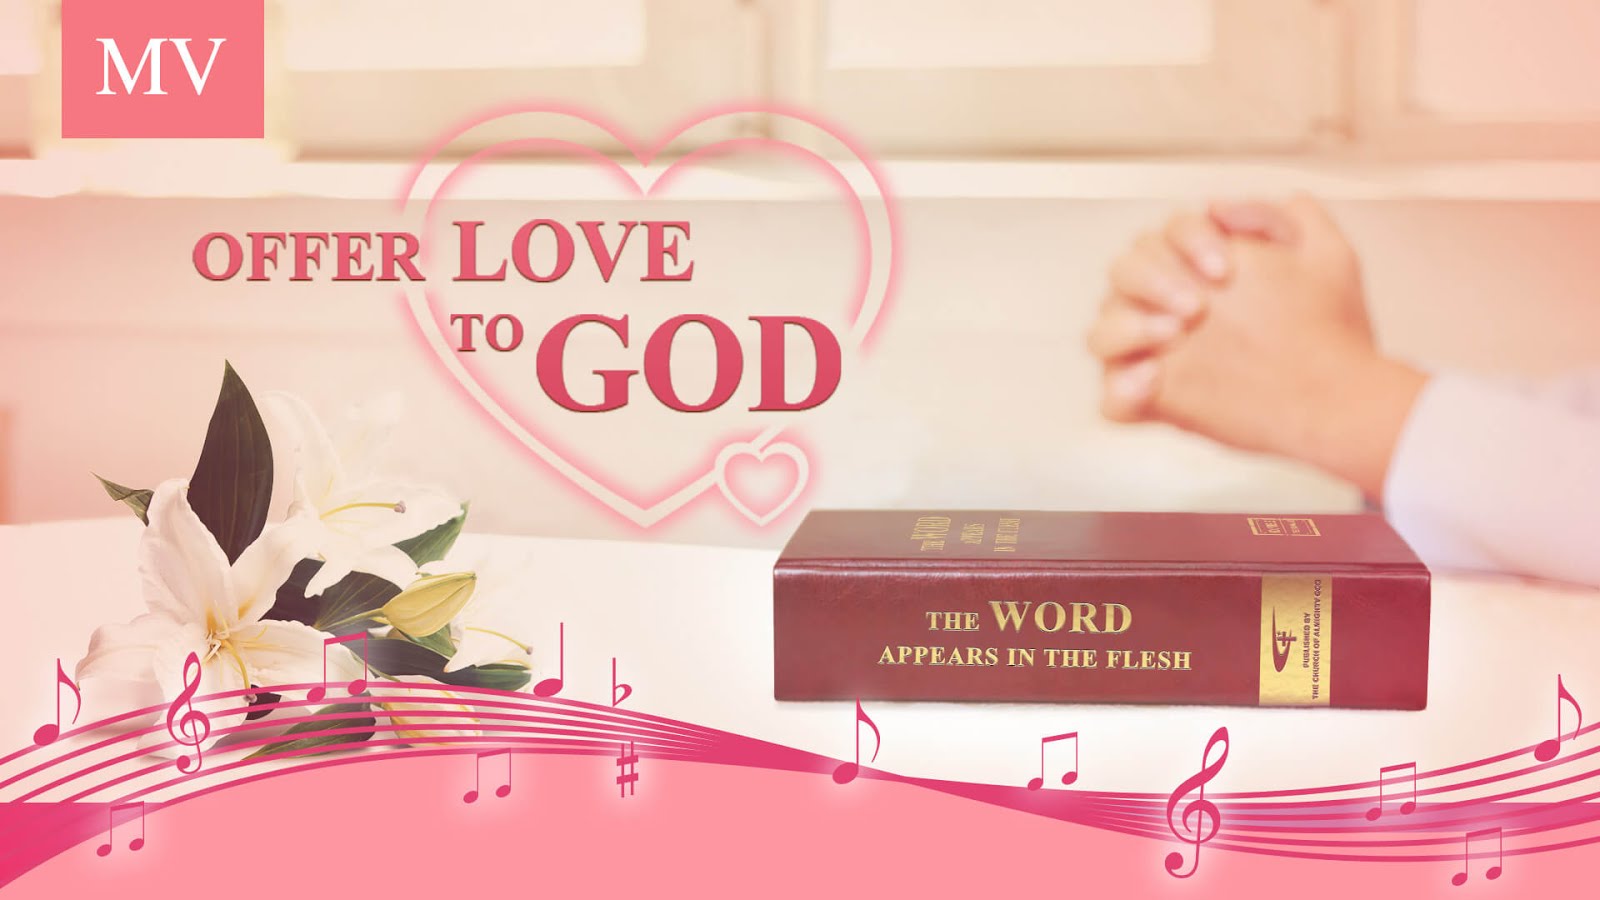 Kingdom MV “Offer Love to God”